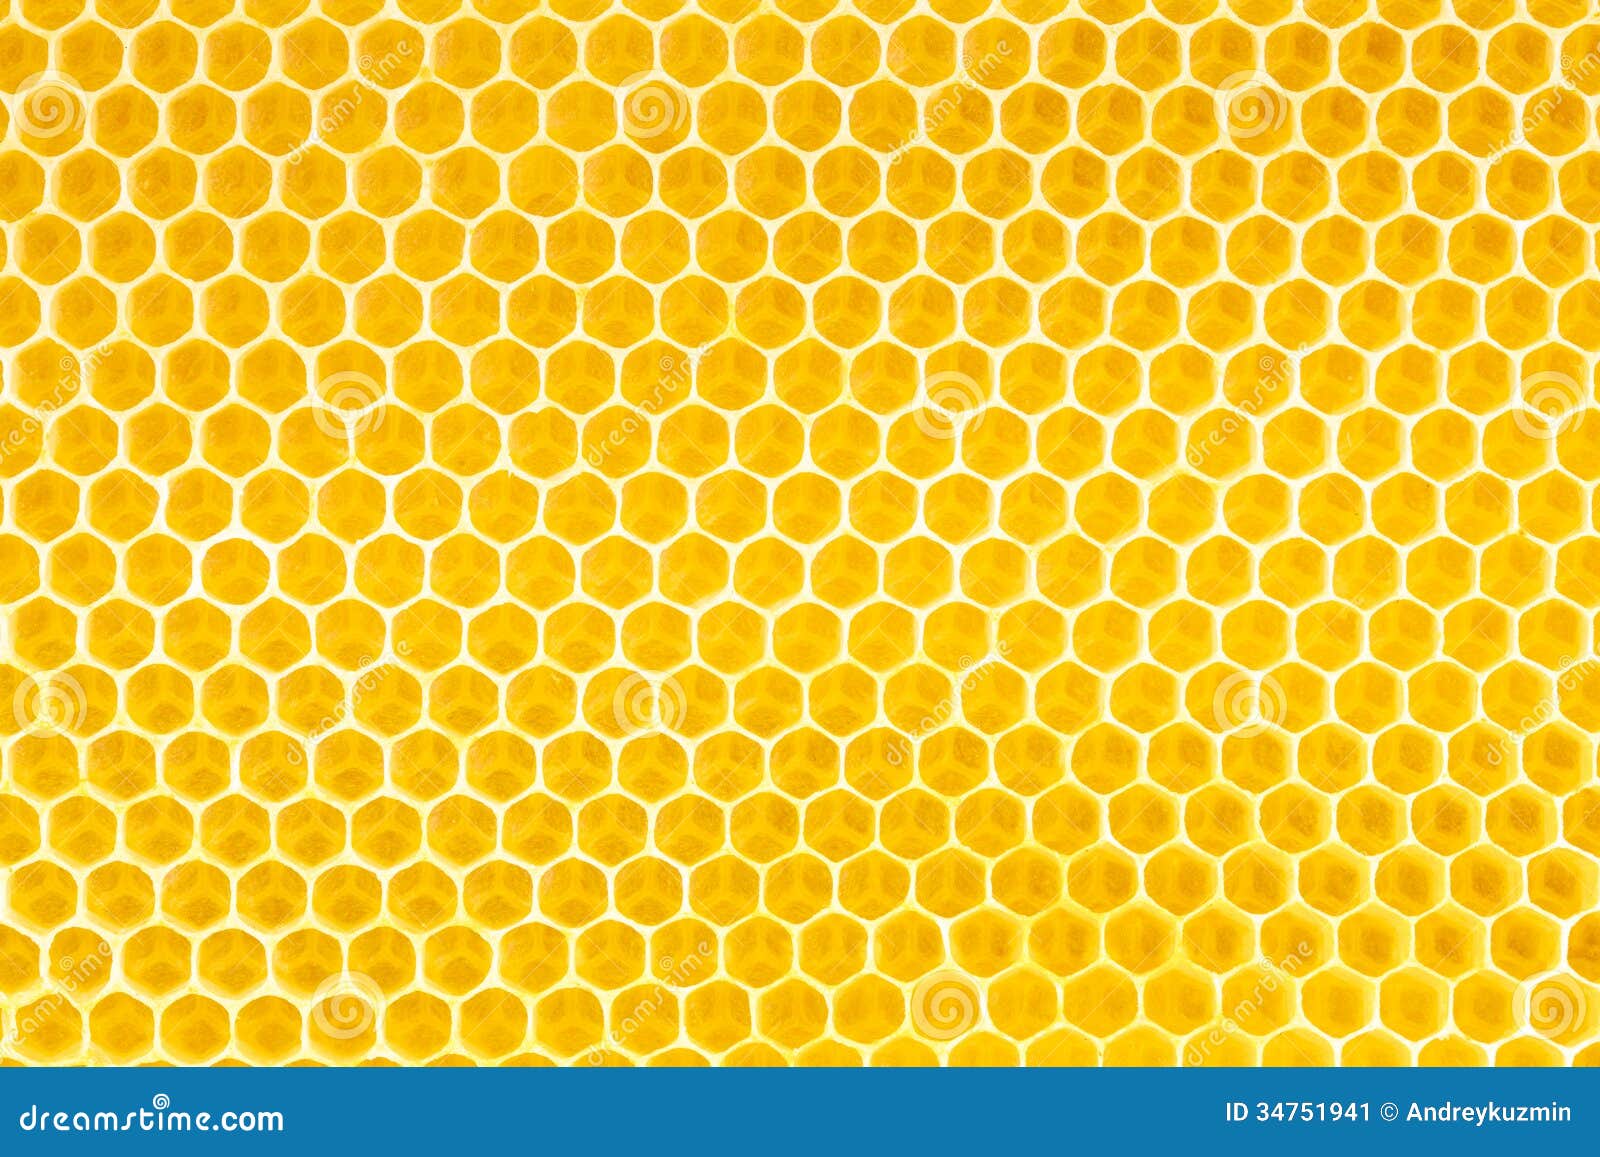 honey in honeycomb background